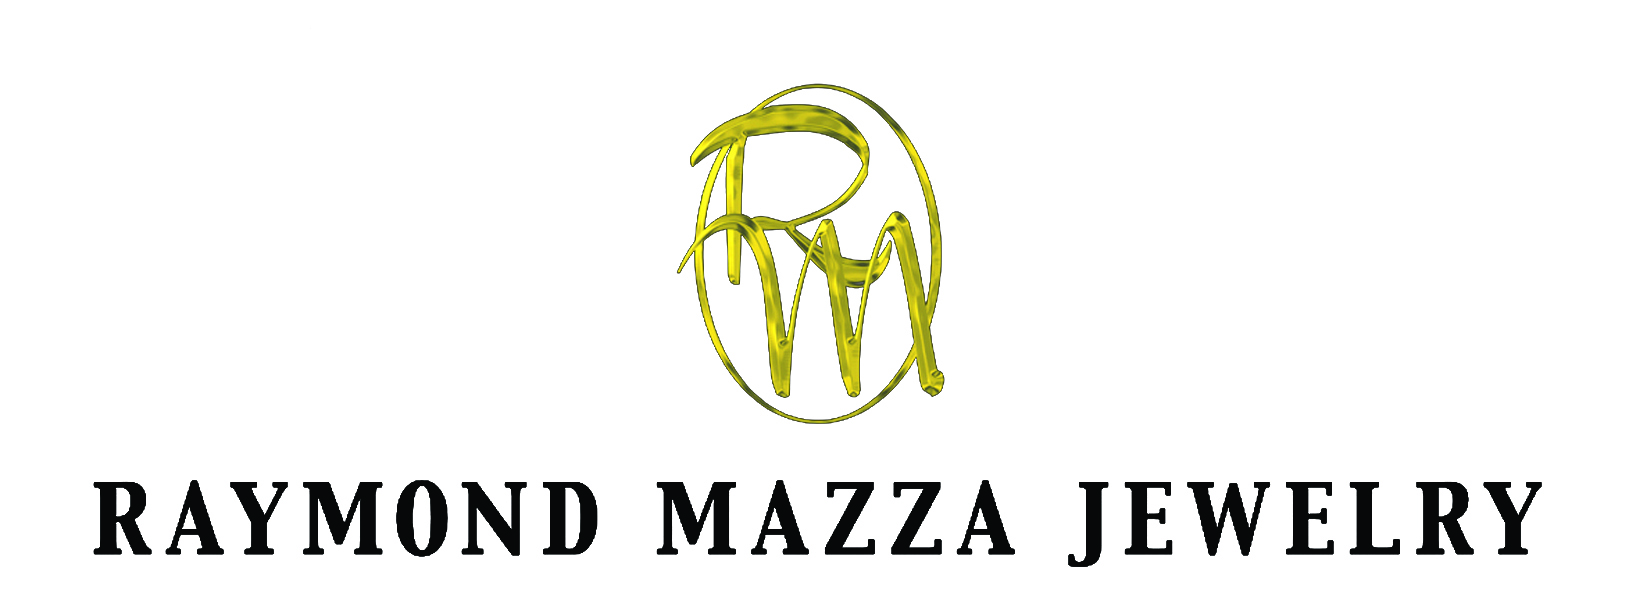 Raymond Mazza Jewelry